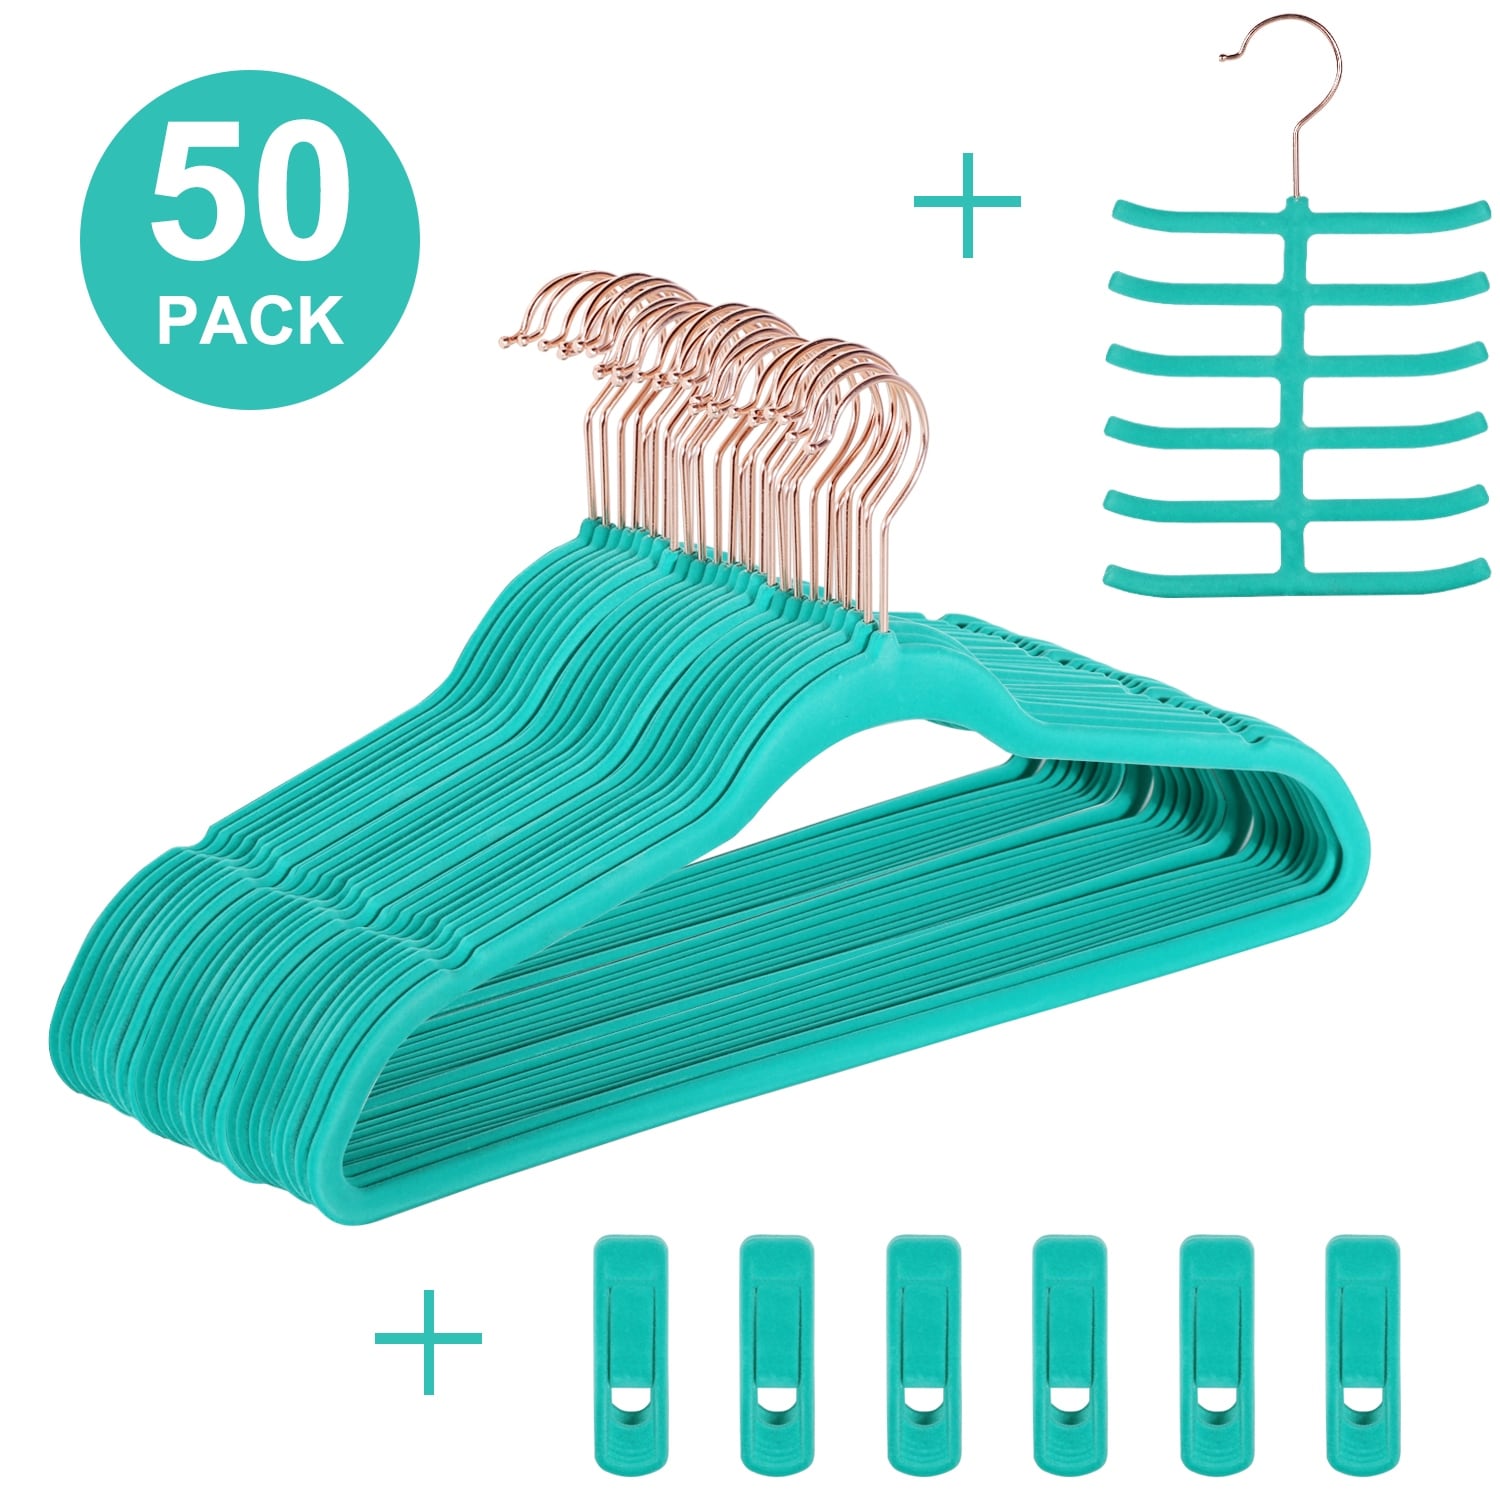 50 pack Premium Space Saving Velvet Clothes Hanger Thin Non Slip Suit Hanger 